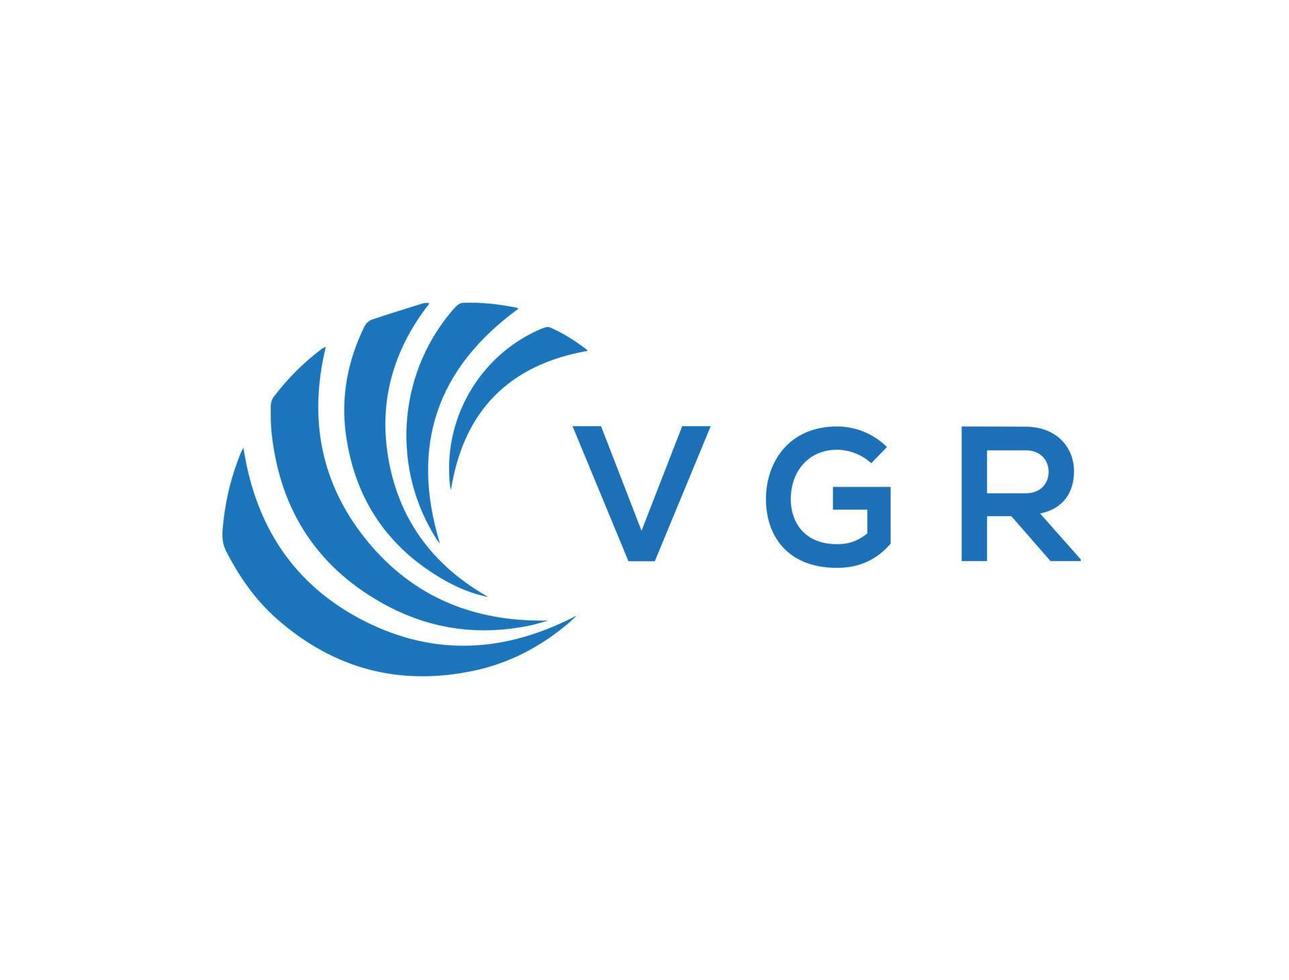 vgr letra logo diseño en blanco antecedentes. vgr creativo circulo letra logo concepto. vgr letra diseño. vector